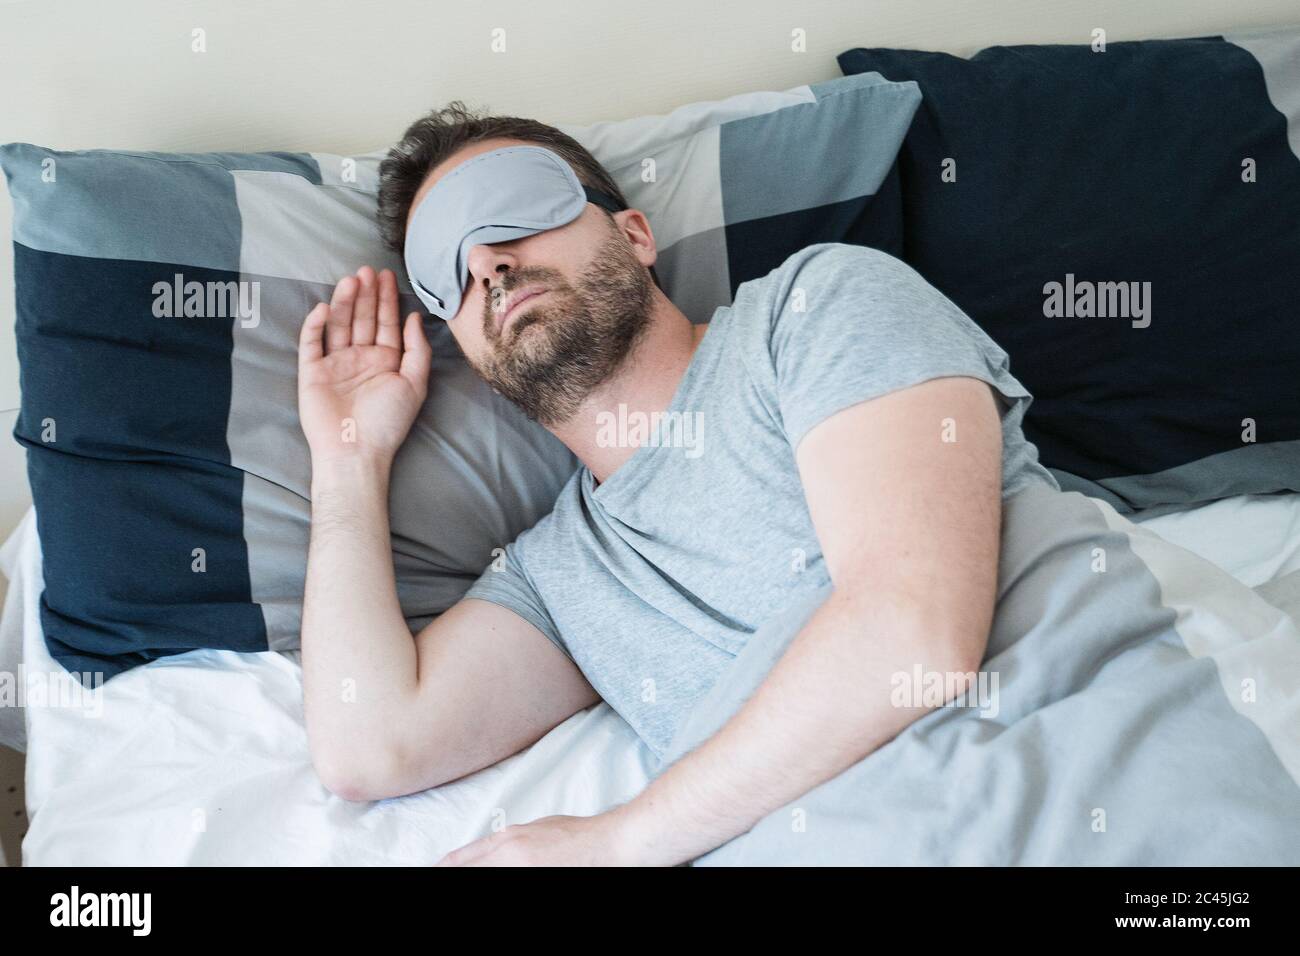 One guy sleeping and wearing an eye mask Stock Photo